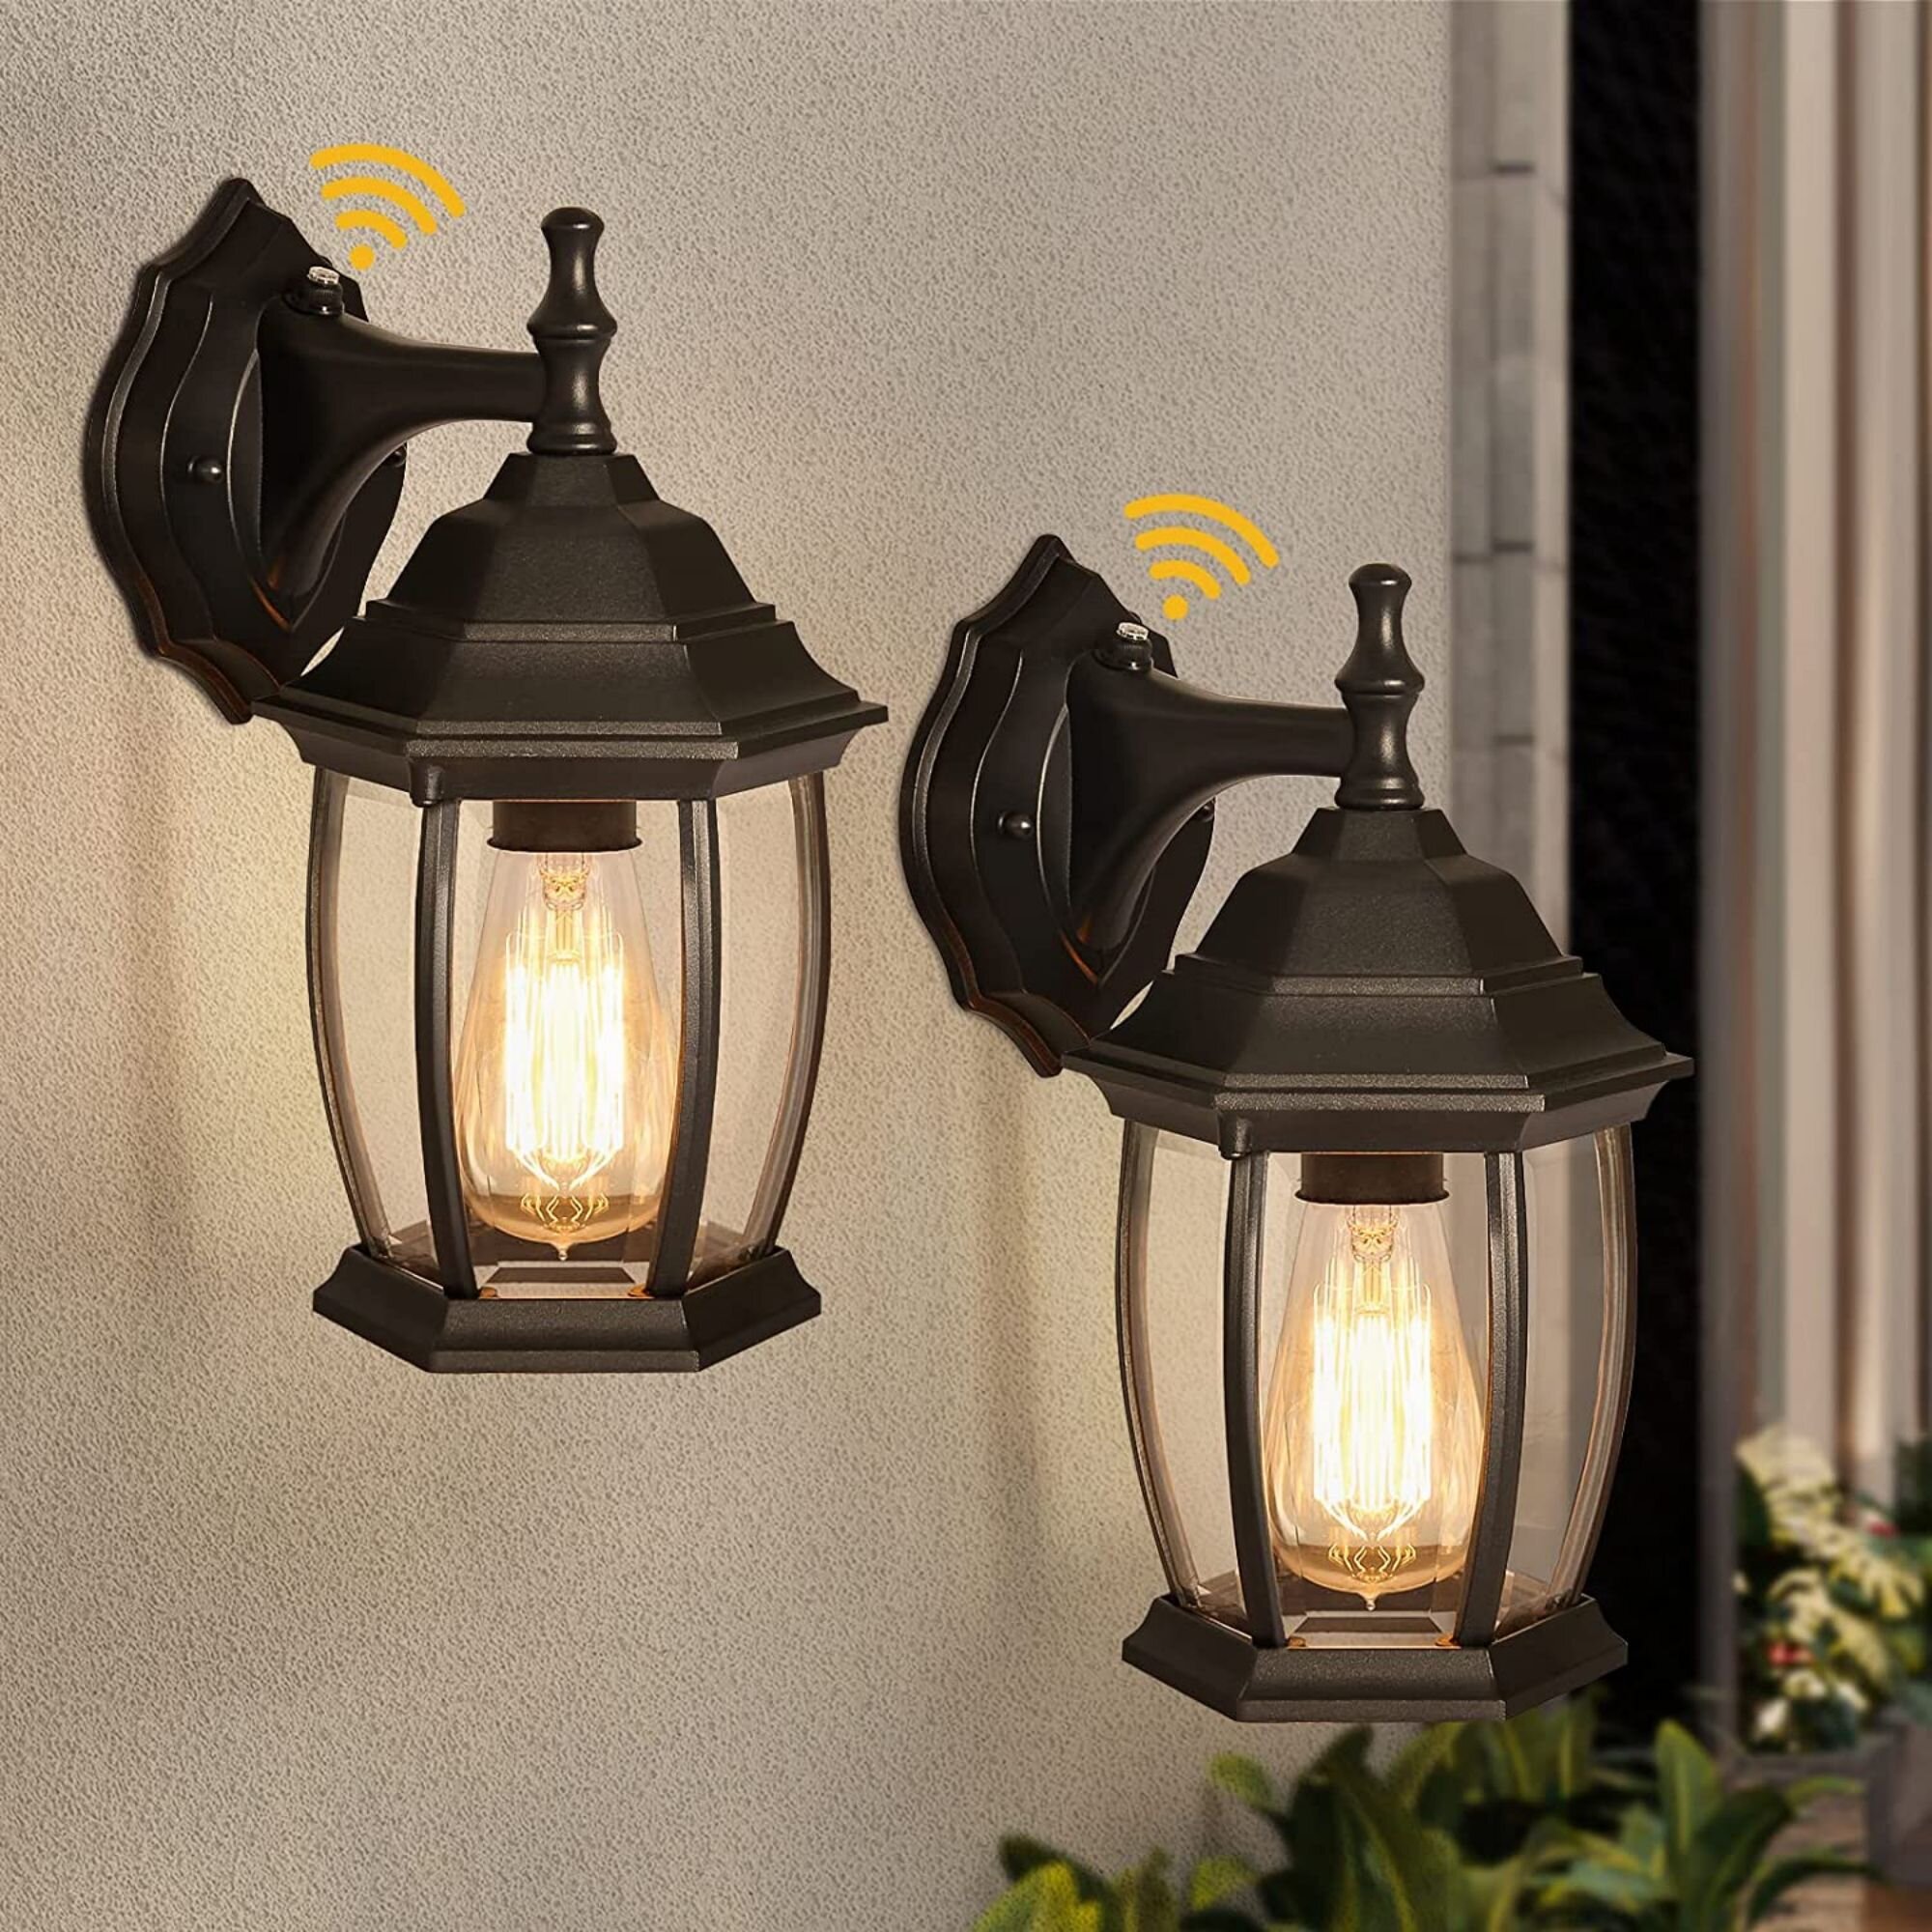 Outdoor Lantern Sconce Porch Light Lamp Antique Wall Lighting Exterior Fixture 